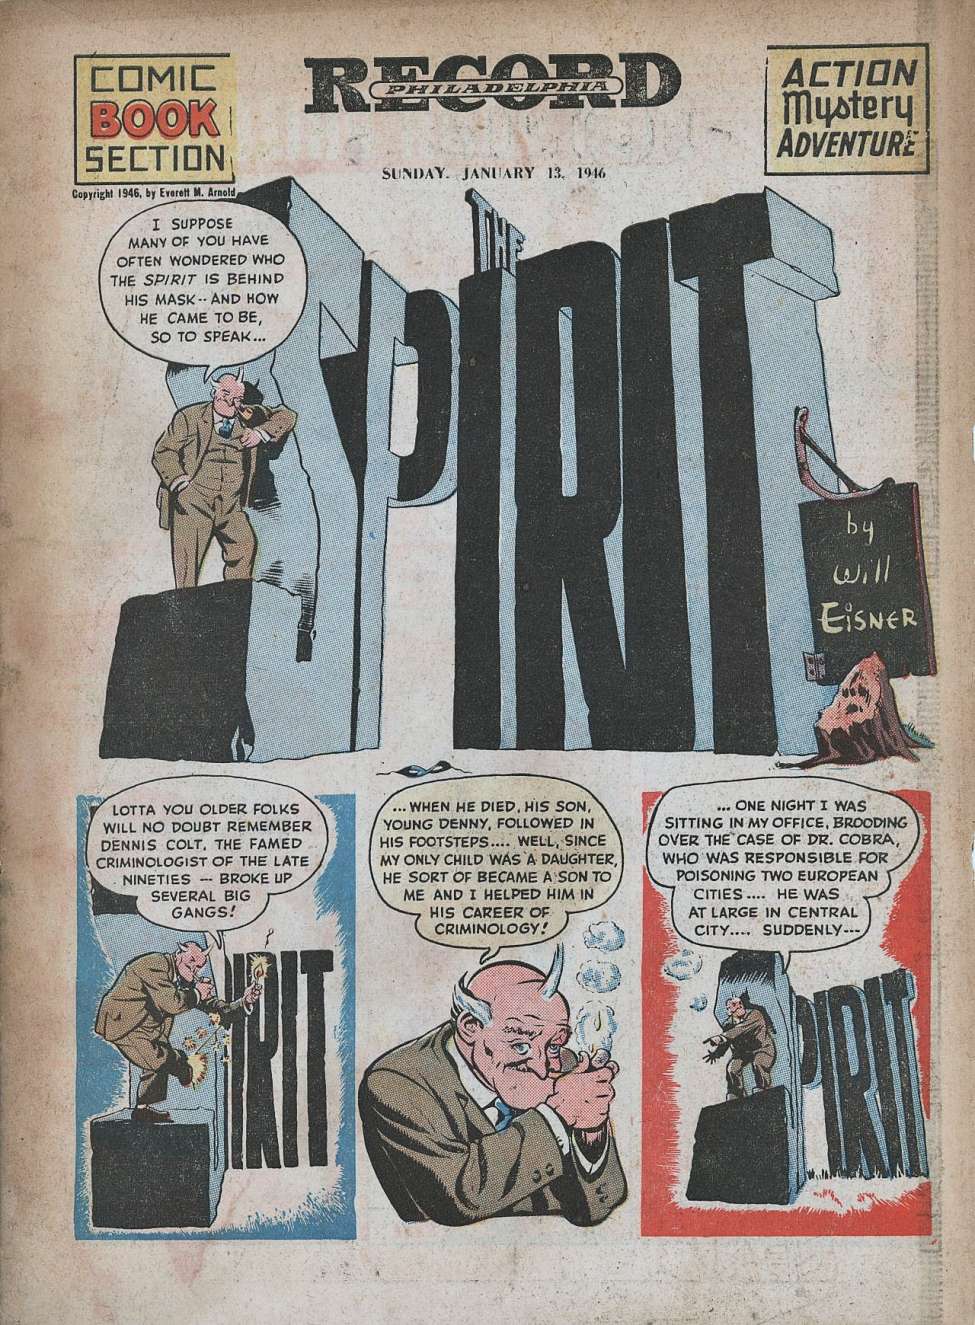 Comic Book Cover For The Spirit (1946-01-13) - Philadelphia Record